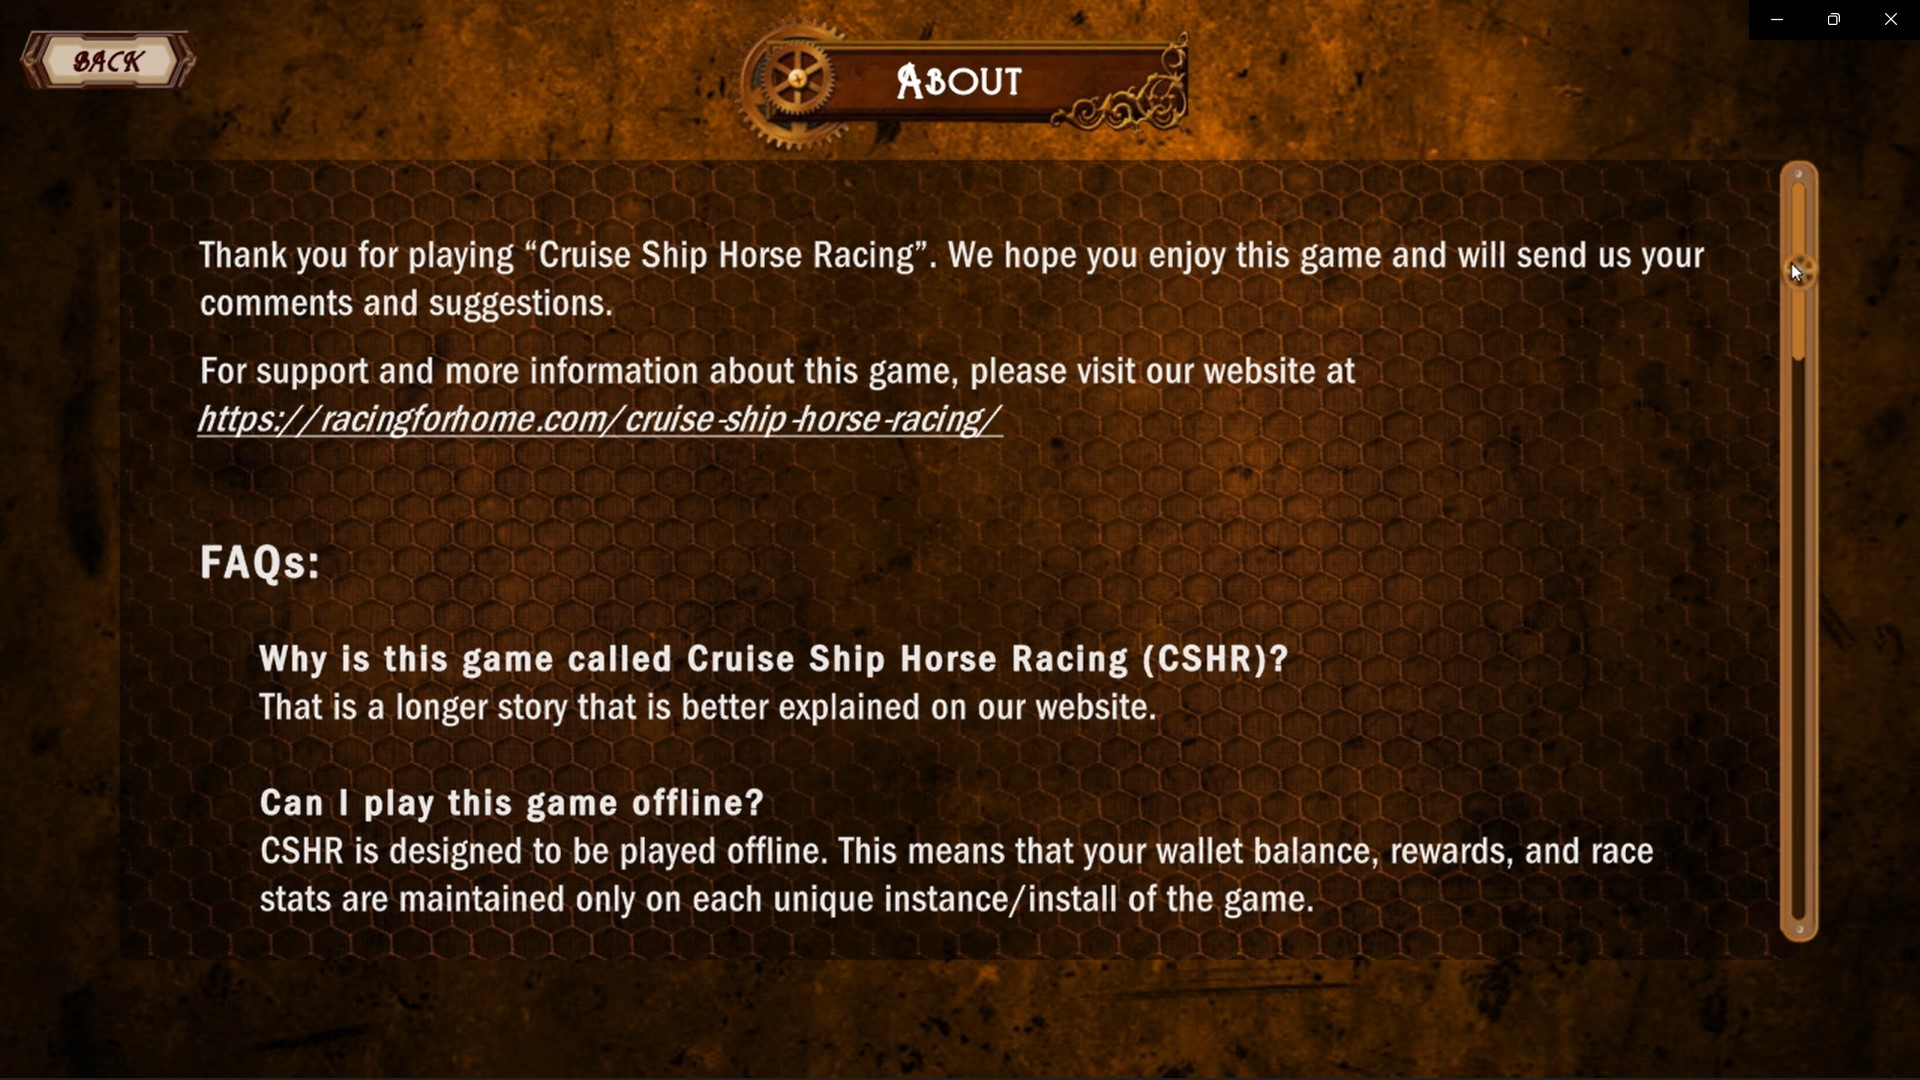 Cruise Ship Horse Racing about page screenshot